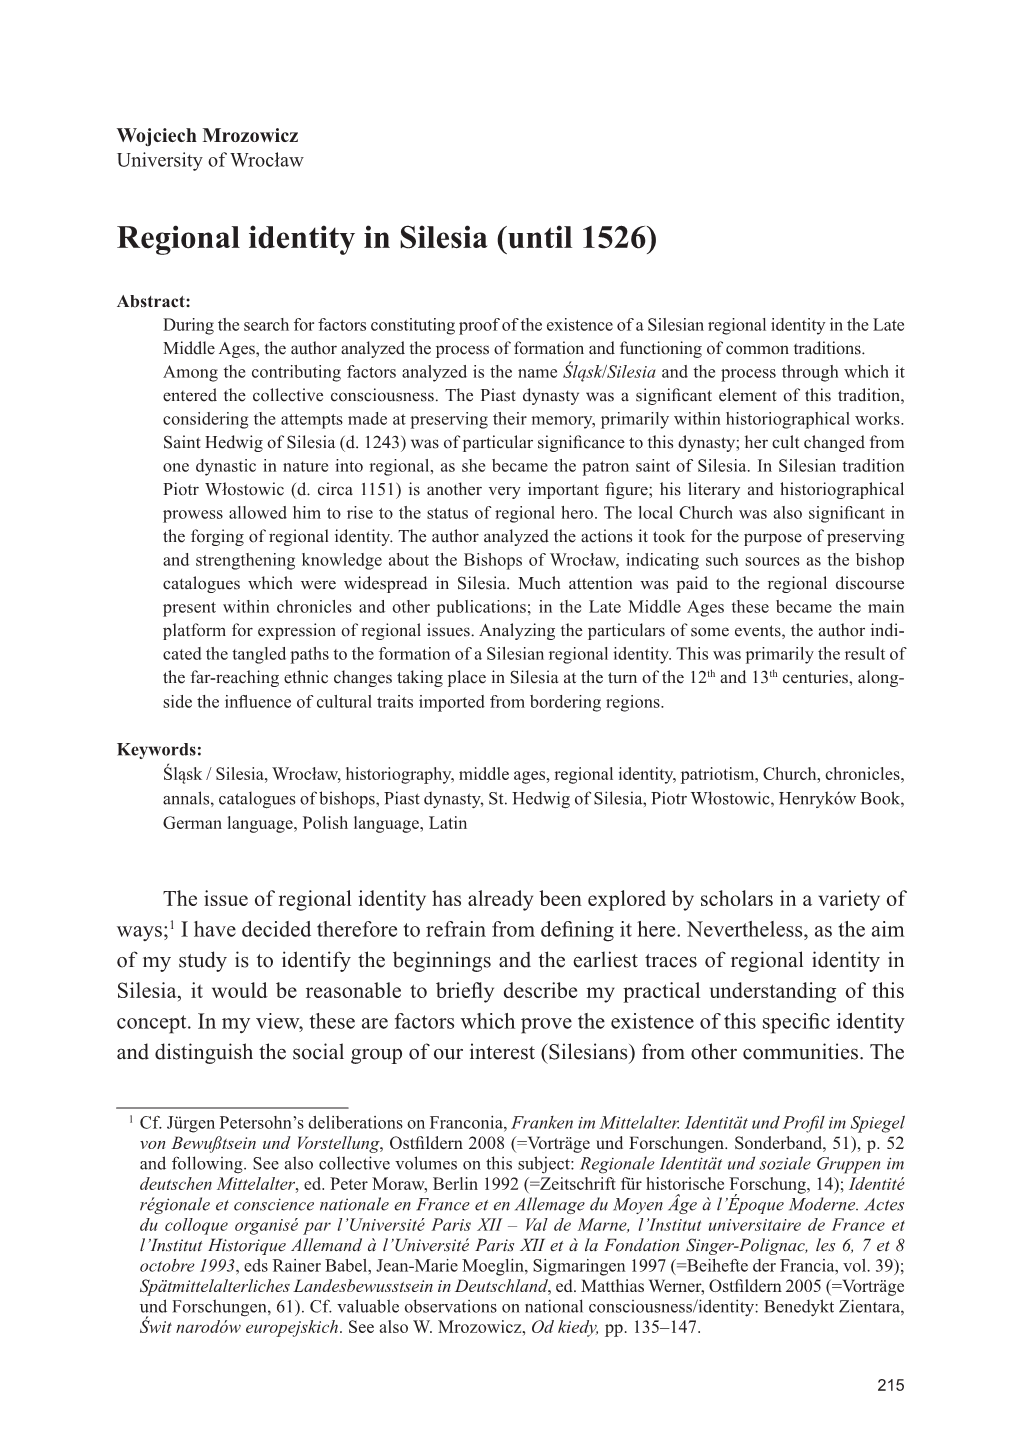 Regional Identity in Silesia (Until 1526)